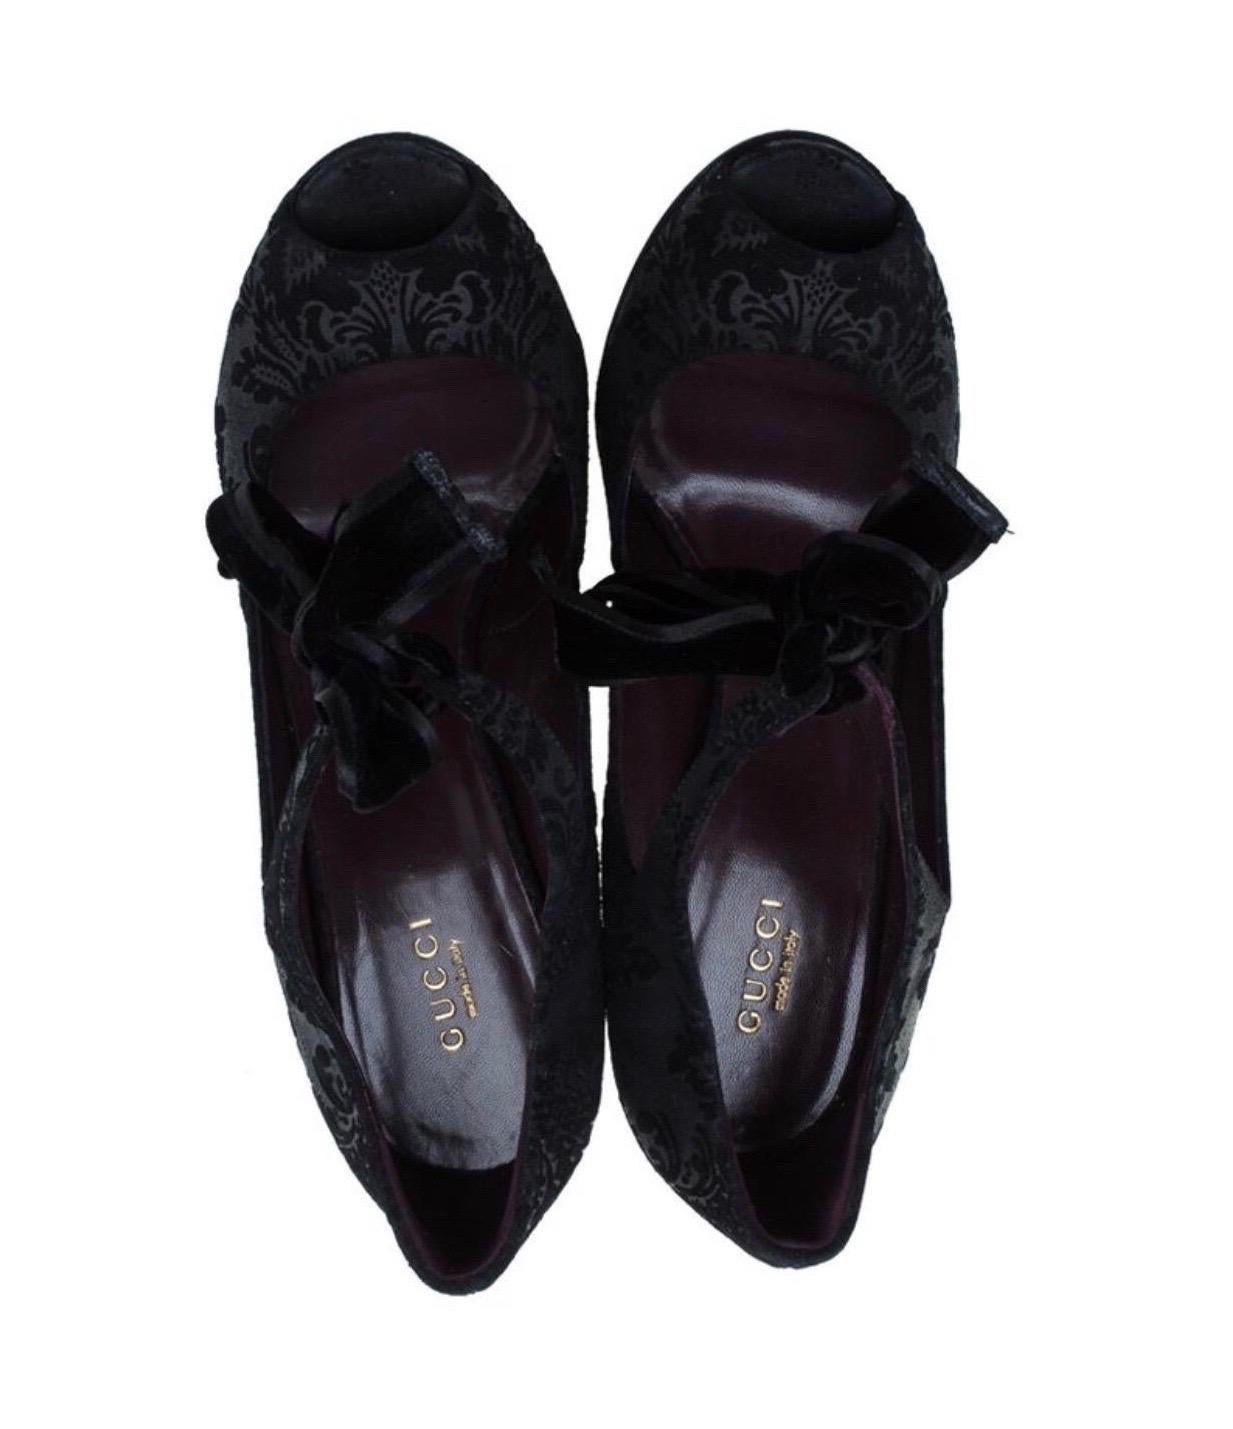 NEW Black Gucci Suede Brocade Pineapple High Heel Sandals Pumps Velvet Bowtie 38 For Sale 2